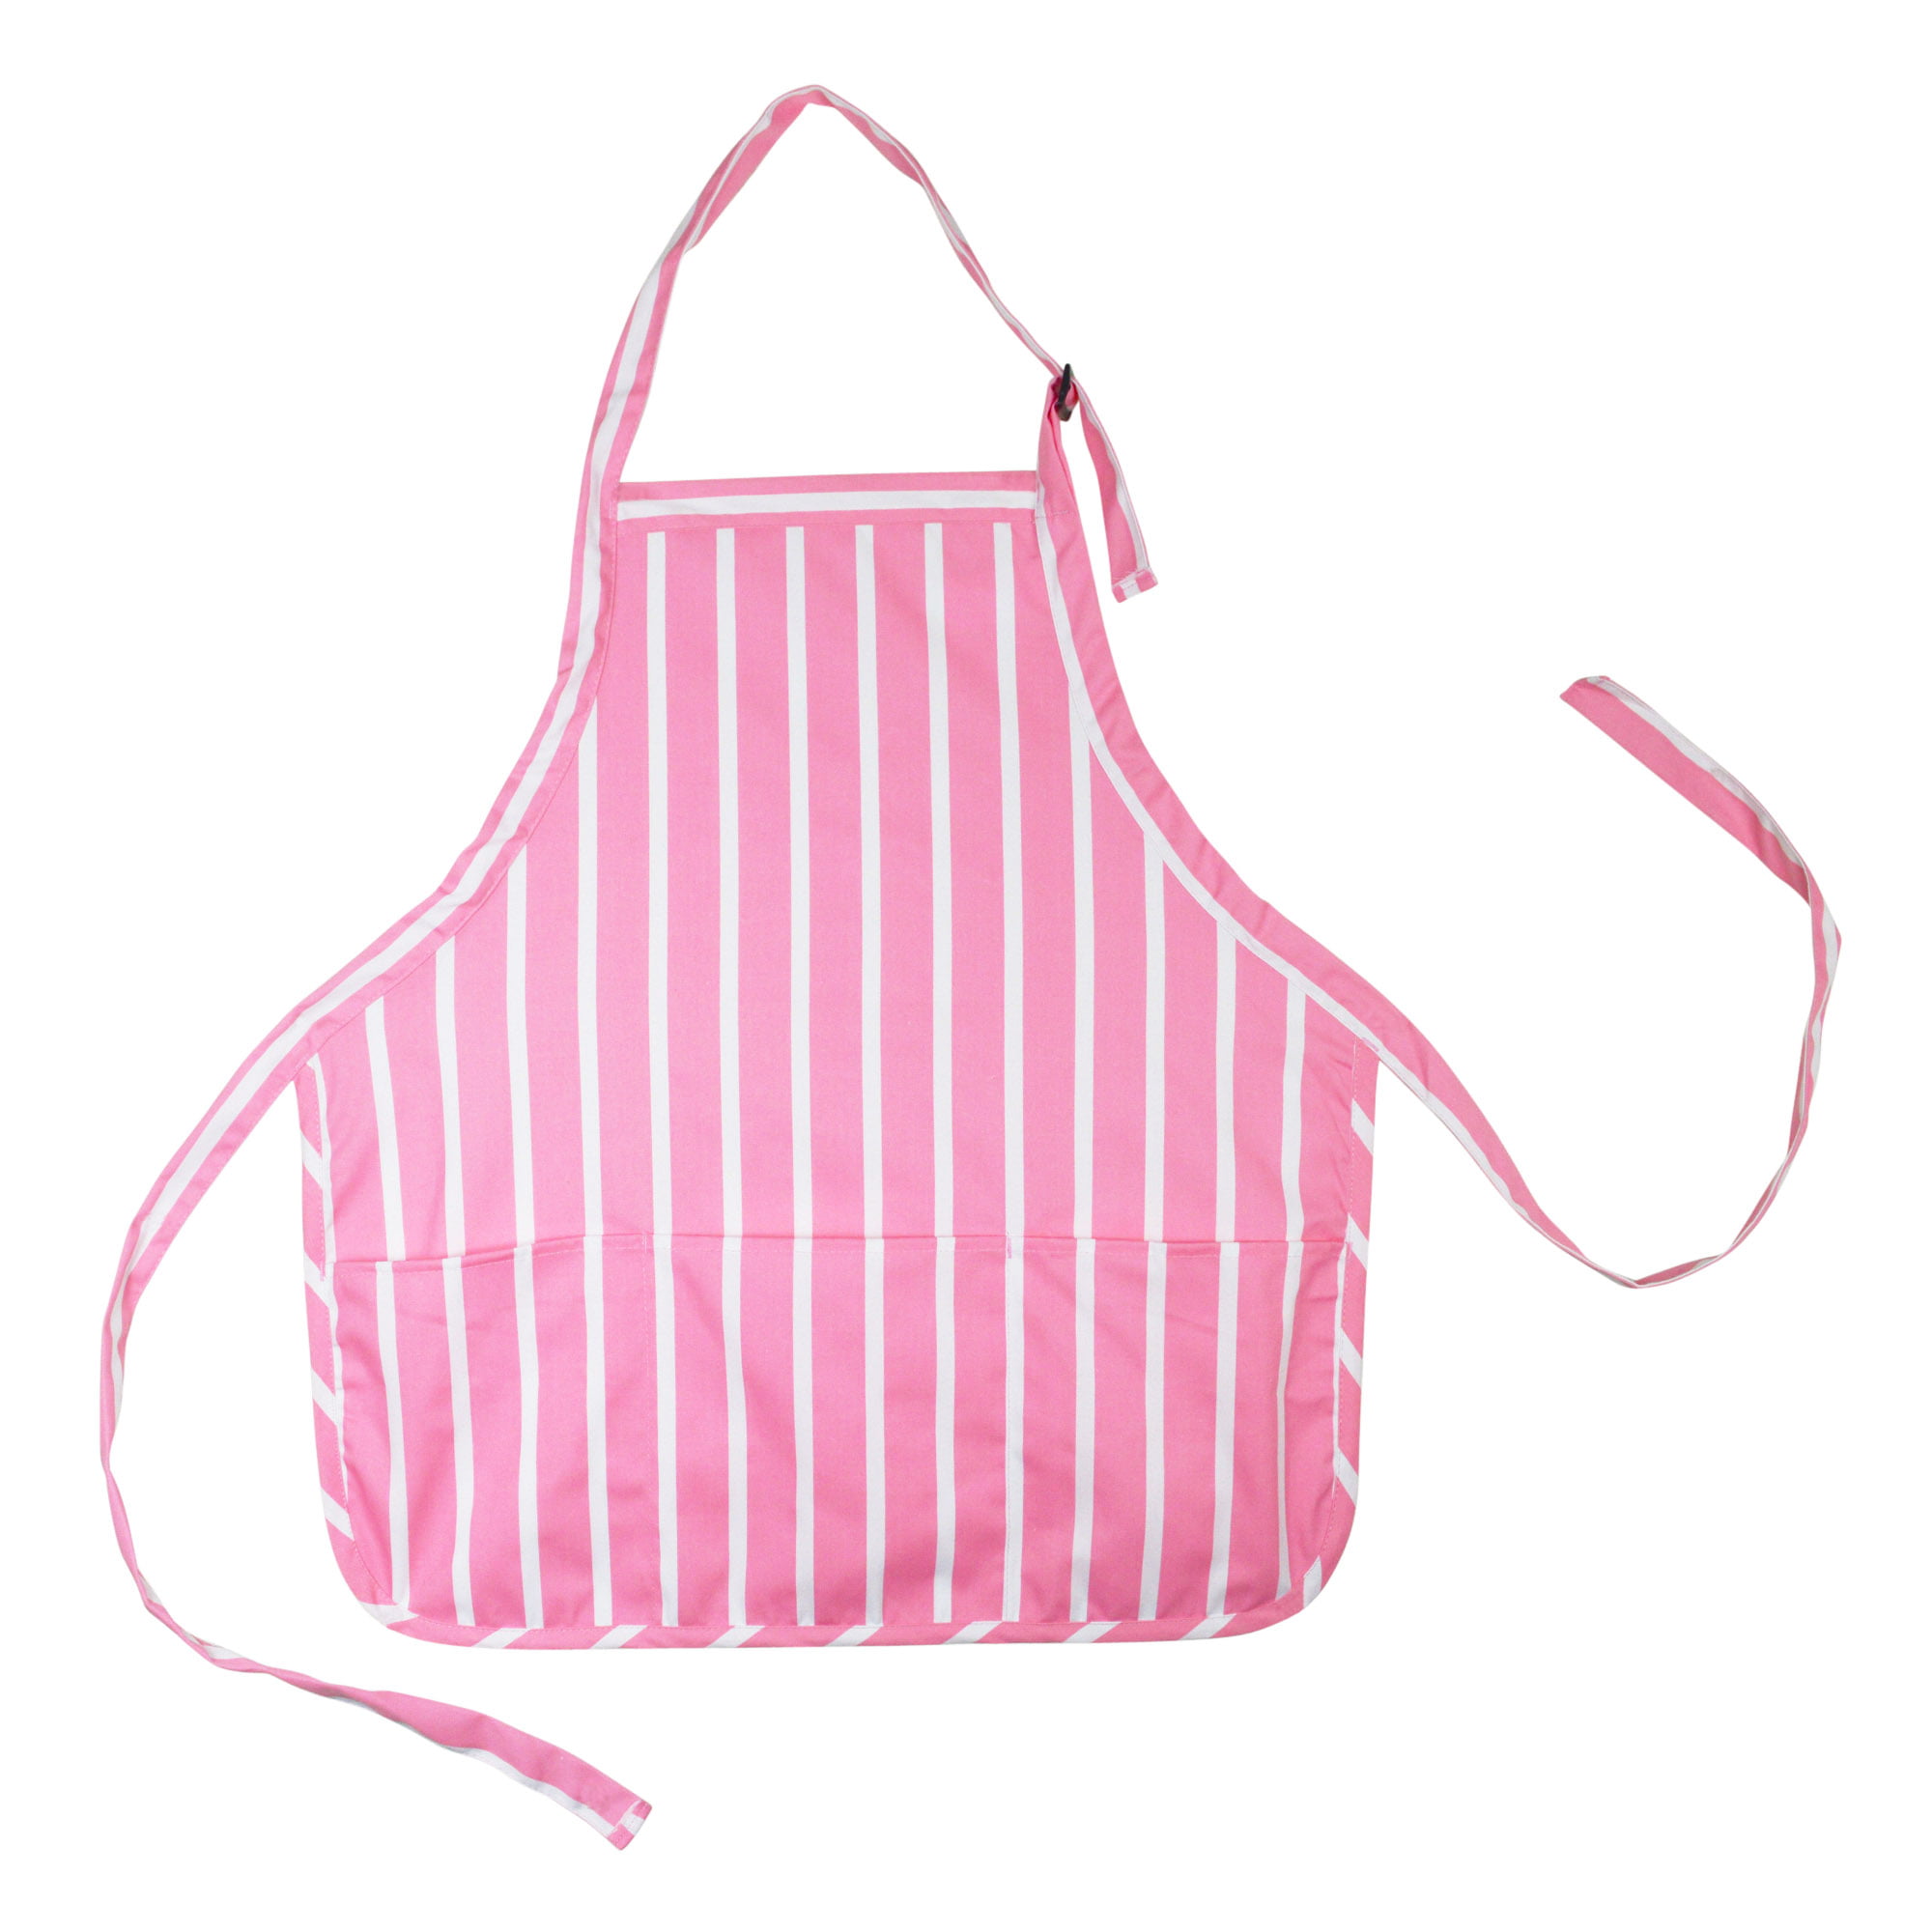 DALIX Apron Commercial Restaurant Home Bib Spun Poly Cotton Kitchen Aprons 2 Pockets in Pink